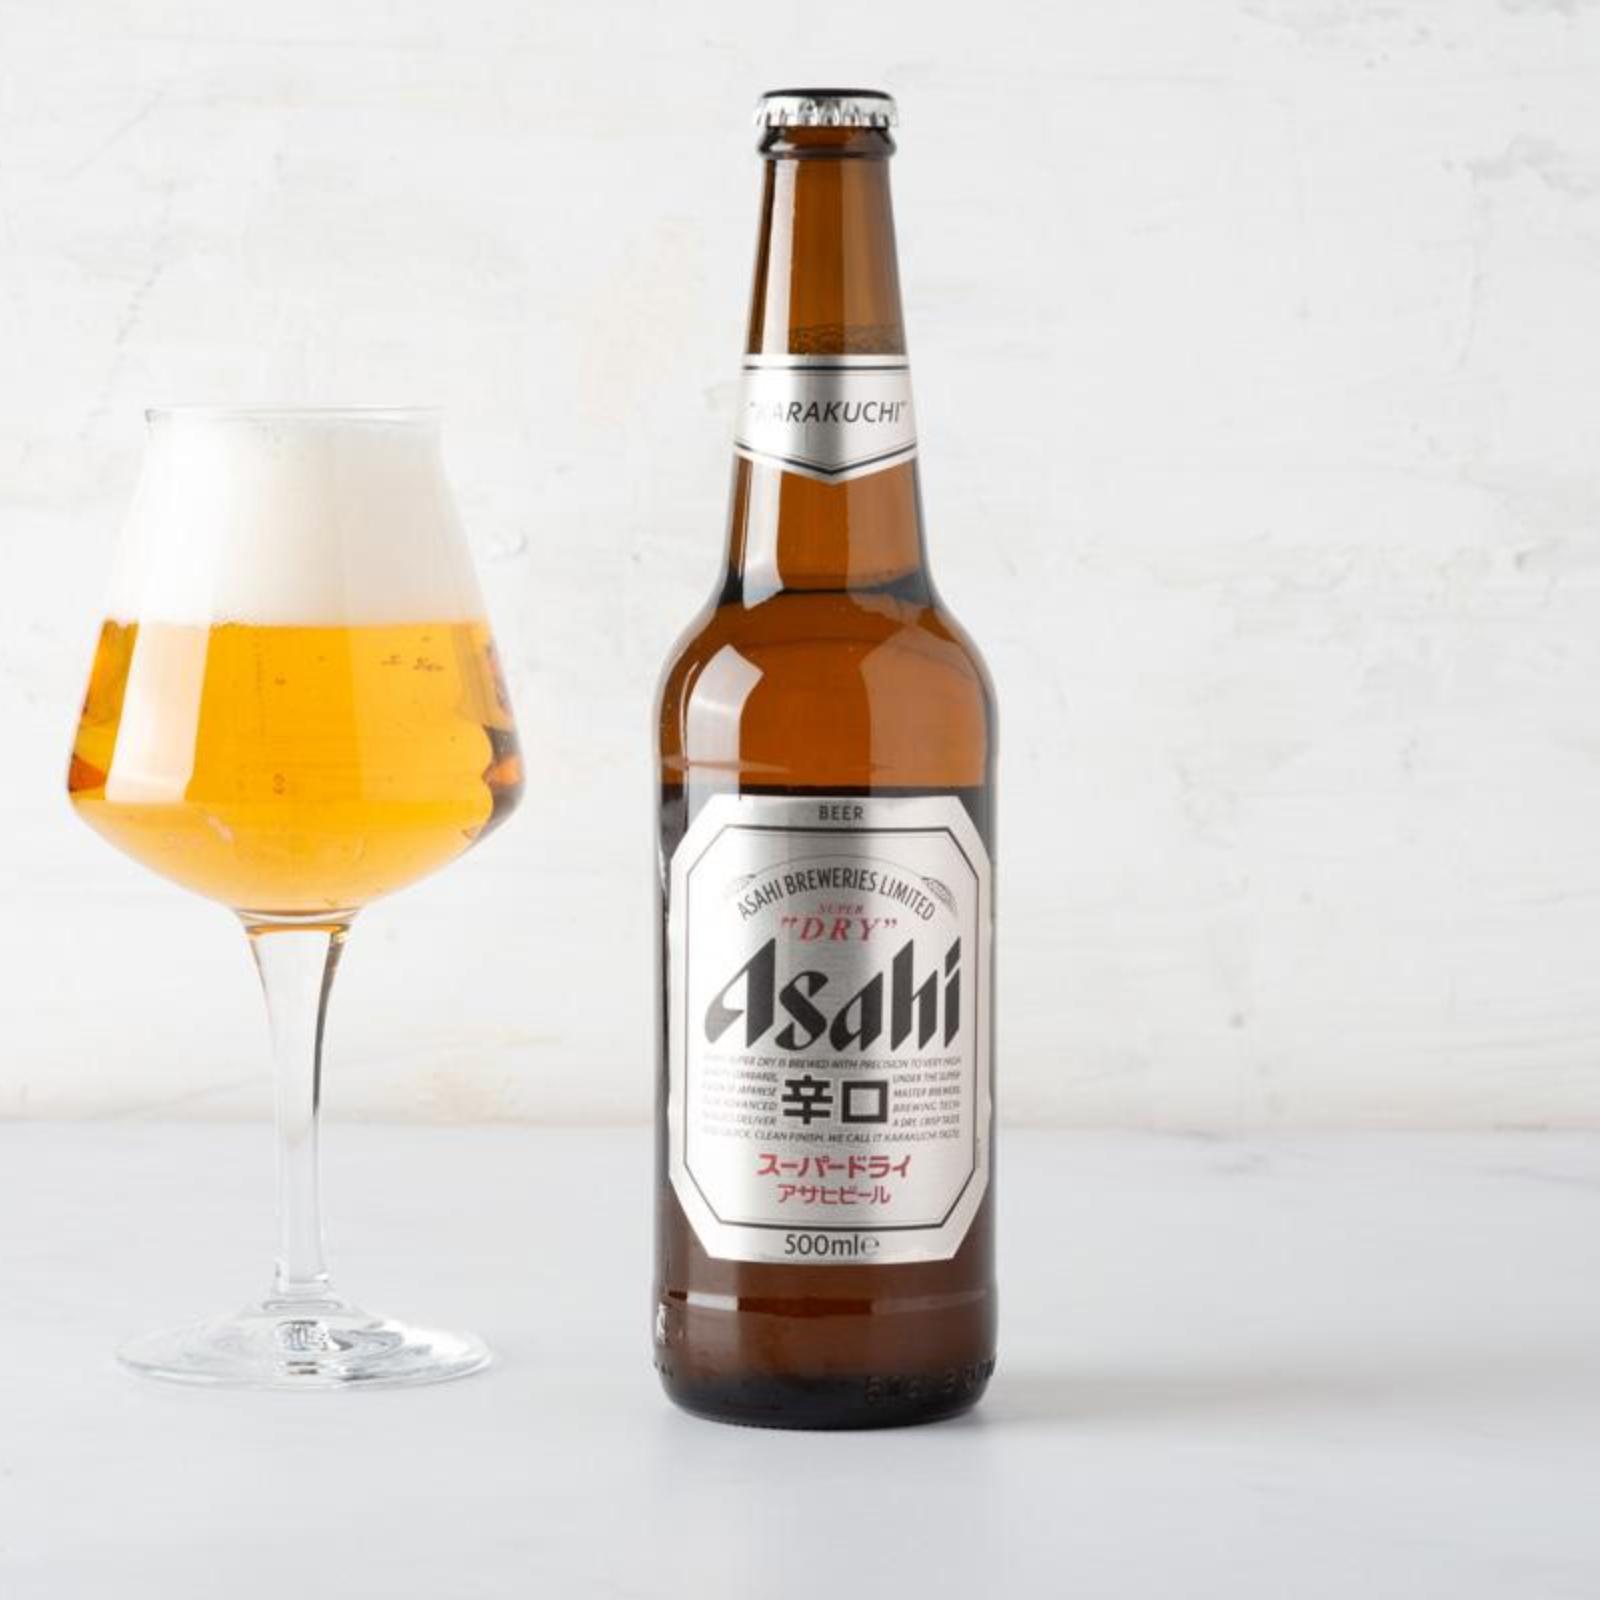 Birra Asahi Super dry